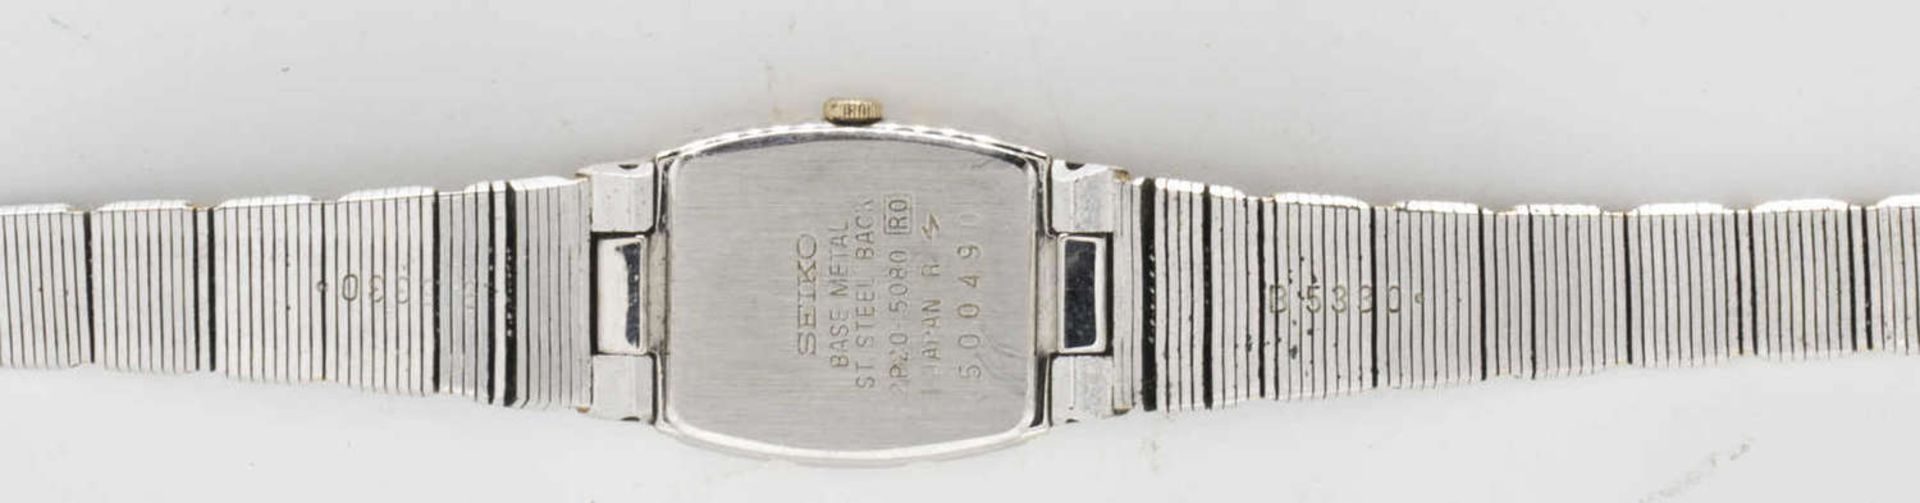 Seiko women's wristwatch 2P20-5080. bicolor. - Image 2 of 2